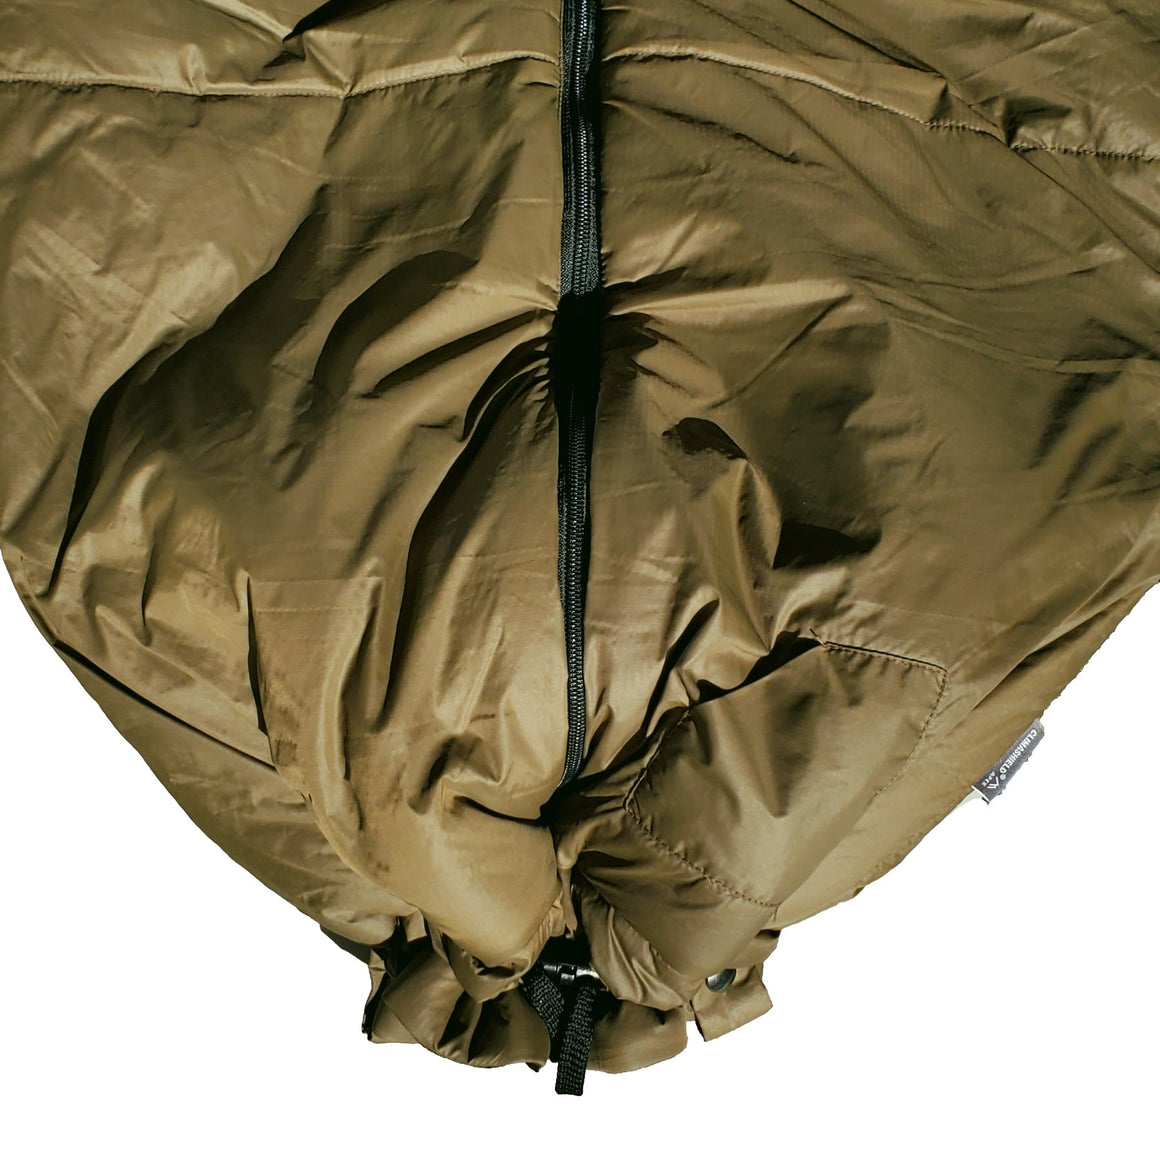 Cozybag Wilderness - the ideal 3 season sleeping bag